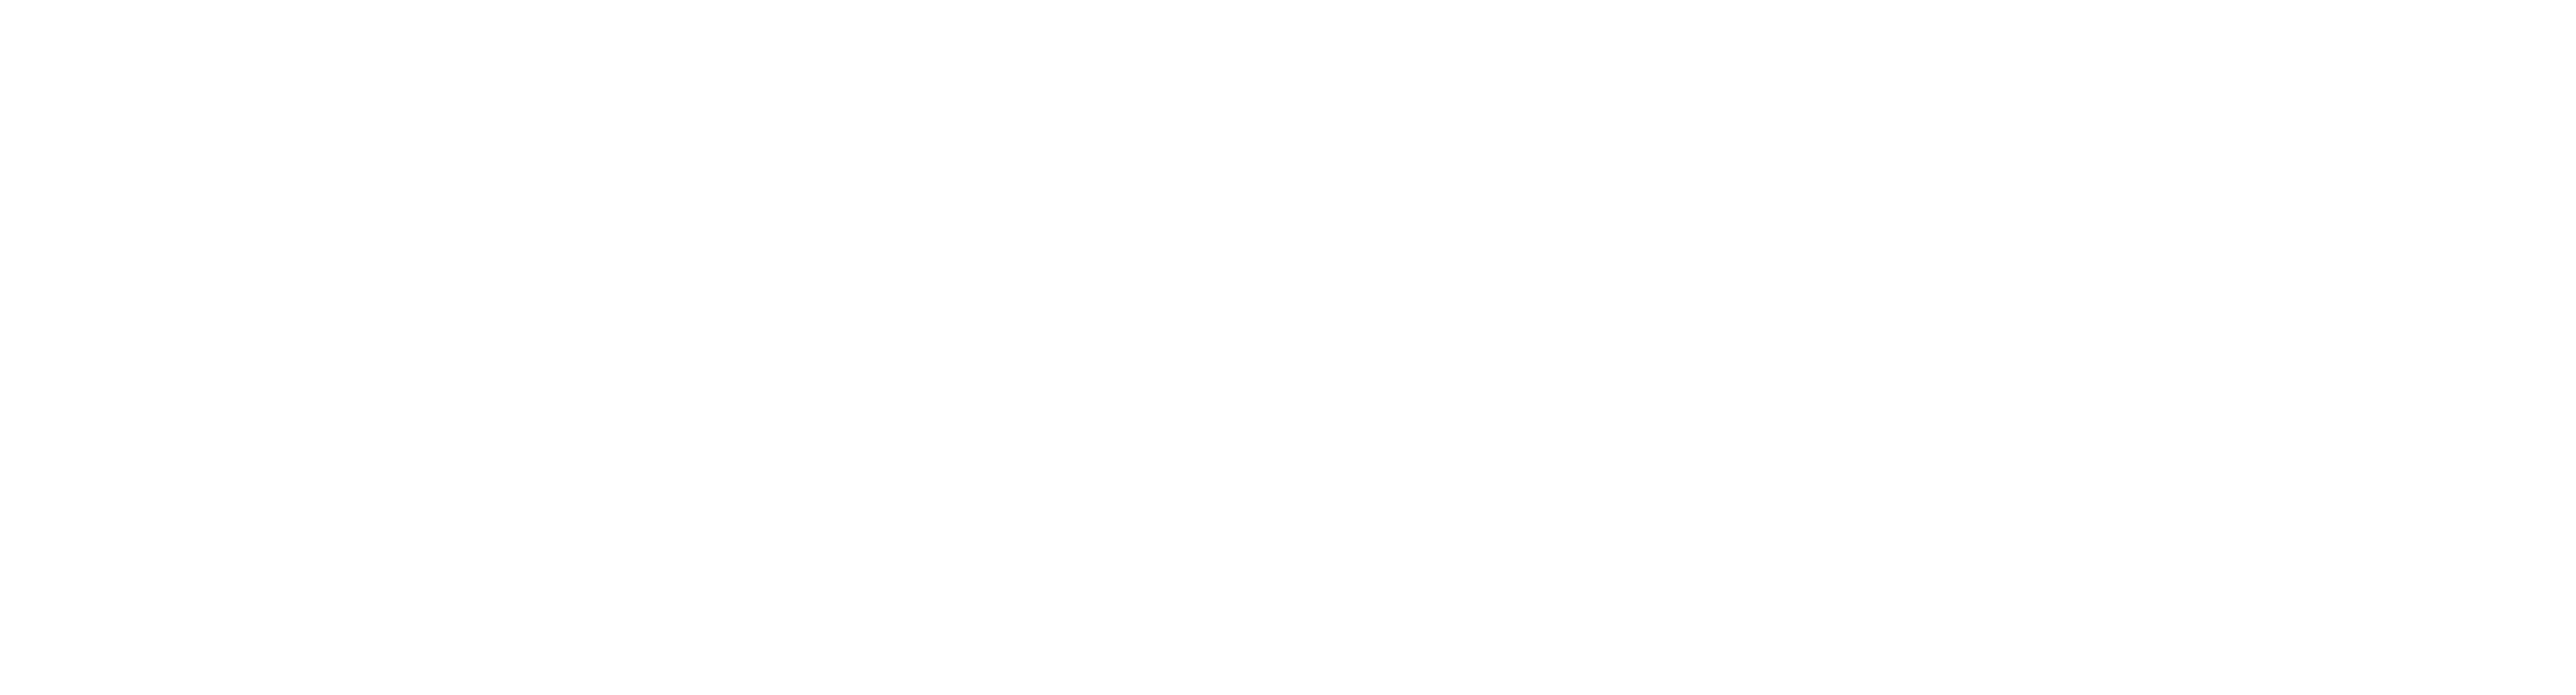 Ohio University official logo